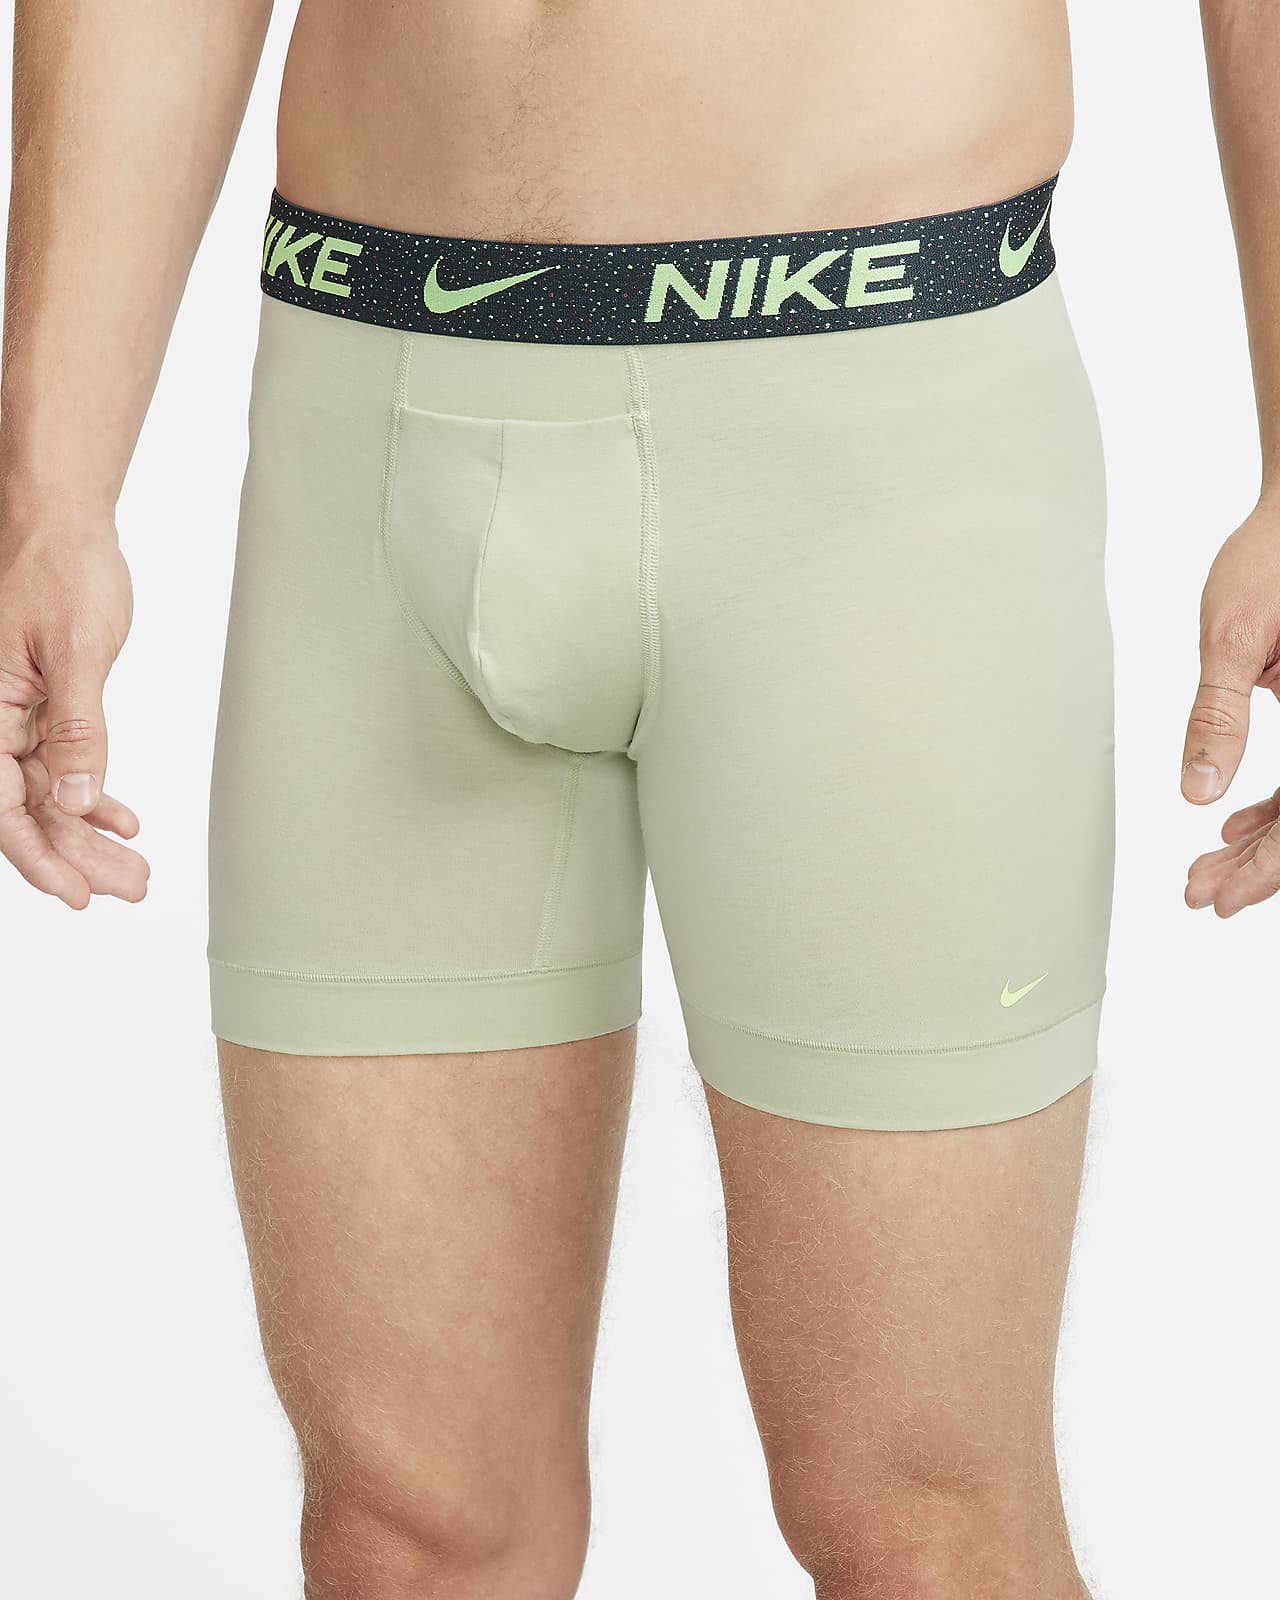 Nike Dri-FIT ReLuxe Men's Boxer Briefs (2-Pack).